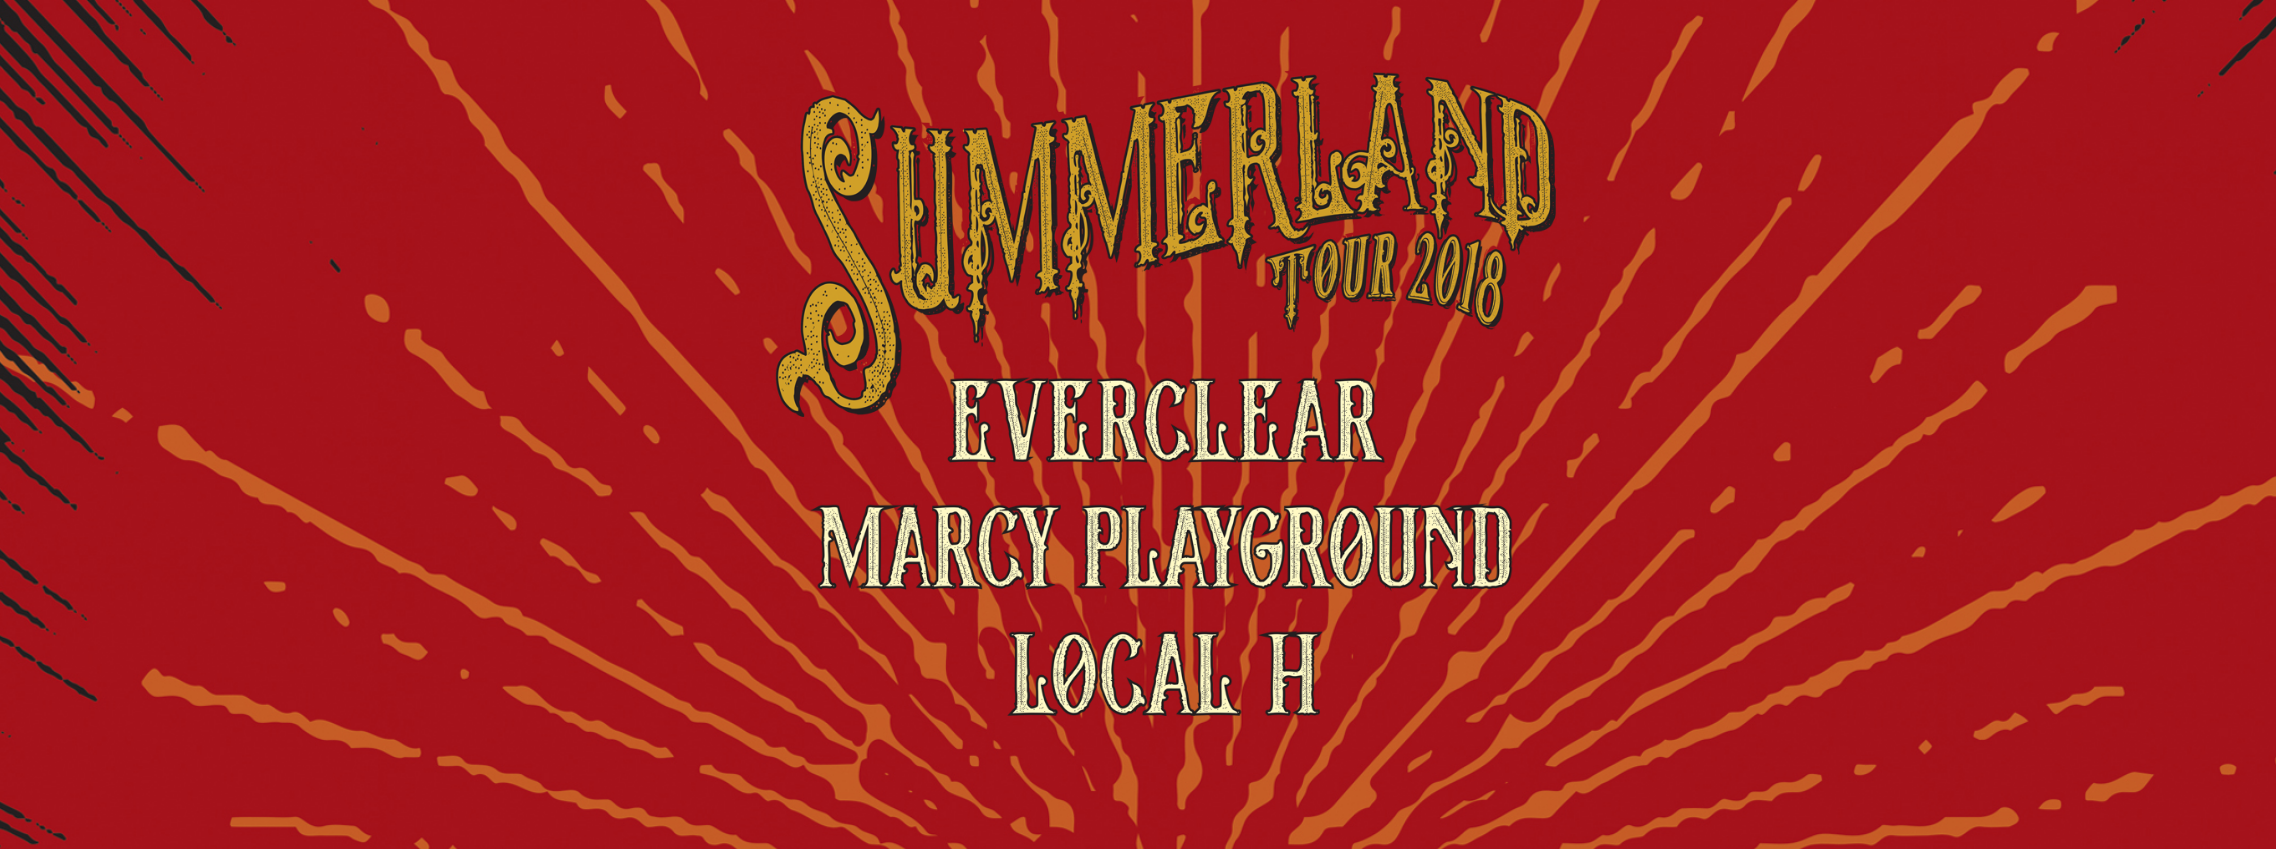 Summerland Tour